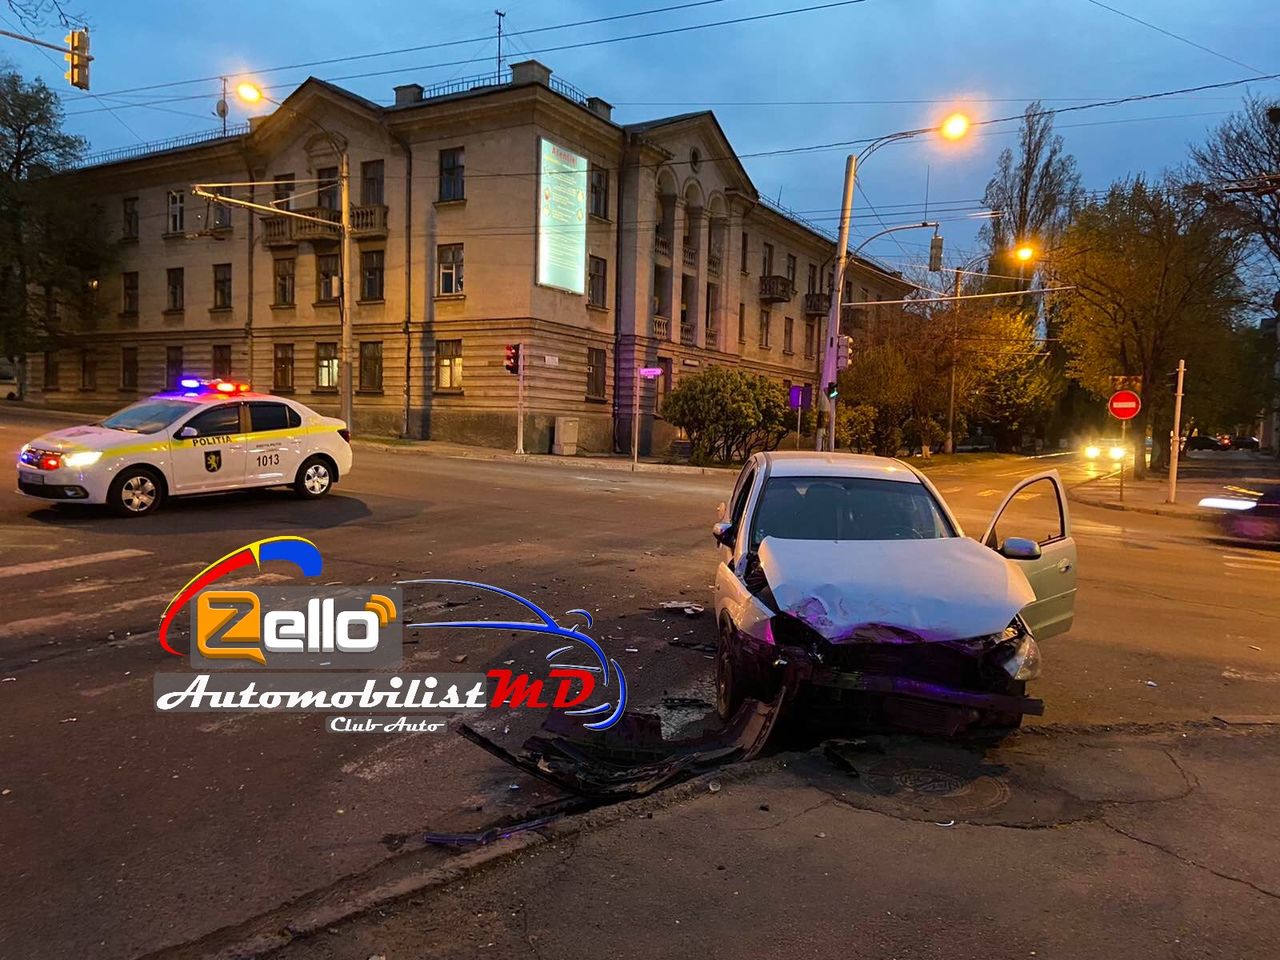 В Кишиневе попала в аварию машина скорой помощи. Скорая везла пациента с симптомами коронавируса (ФОТО)